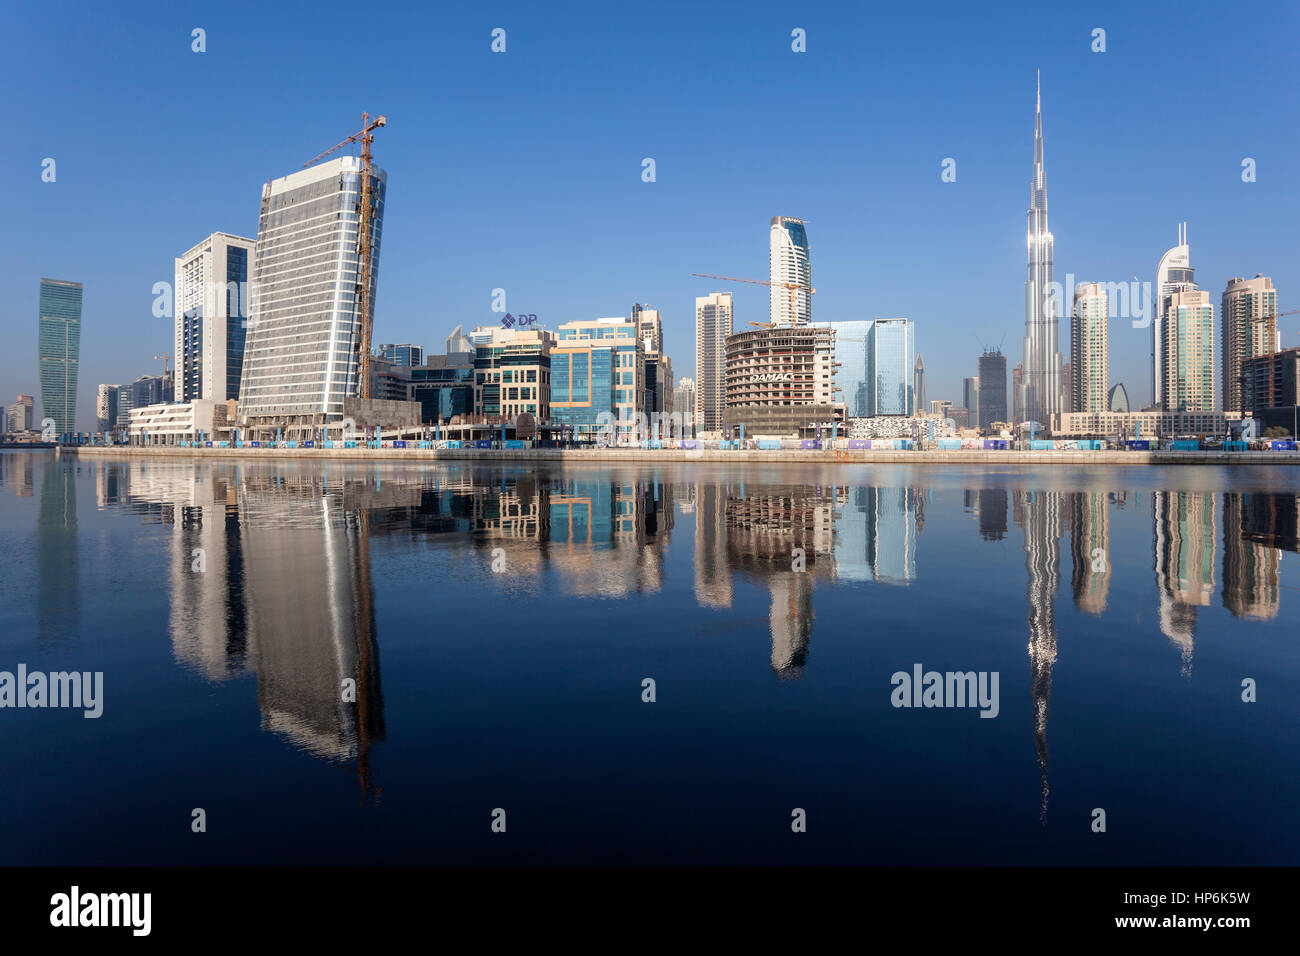 DUBAI, UAE - NOV 30, 2016: The Dubai Business Bay skyline. United Arab Emirates, Middle East Stock Photo